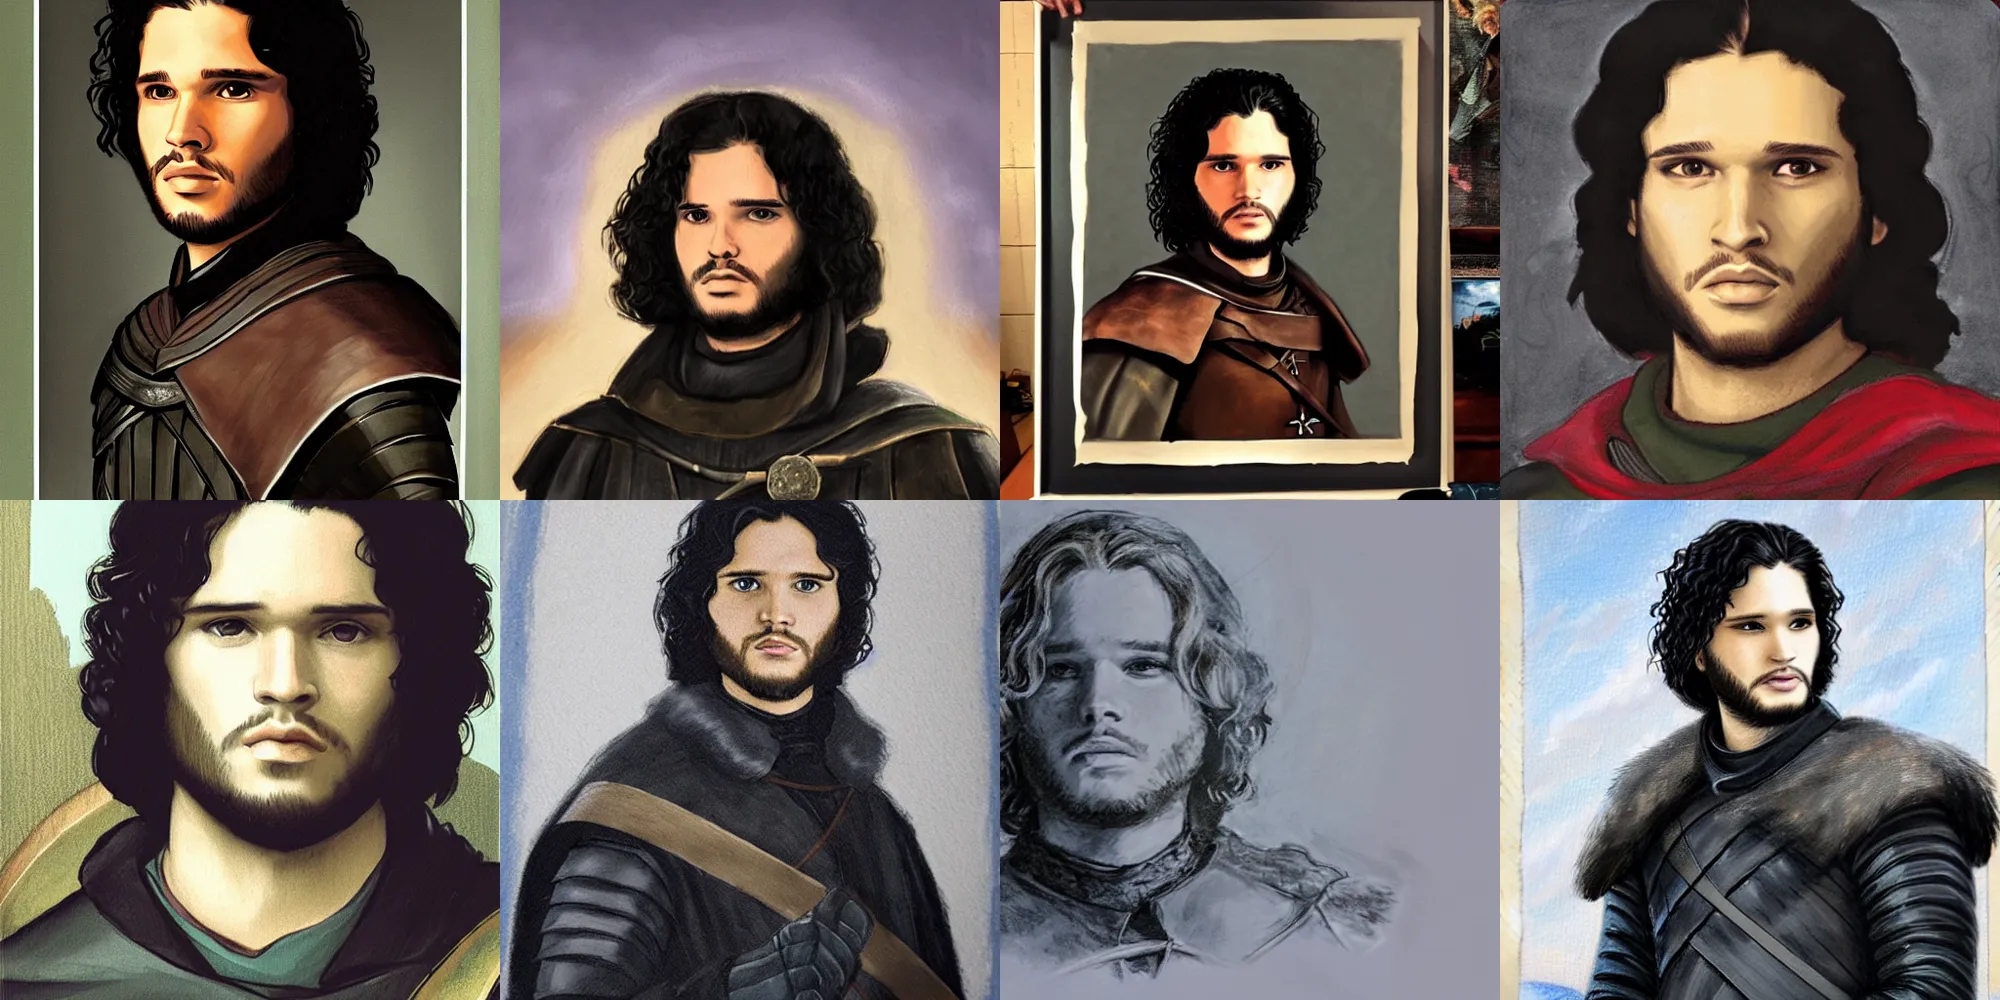 Prompt: Raphael painting of Jon Snow